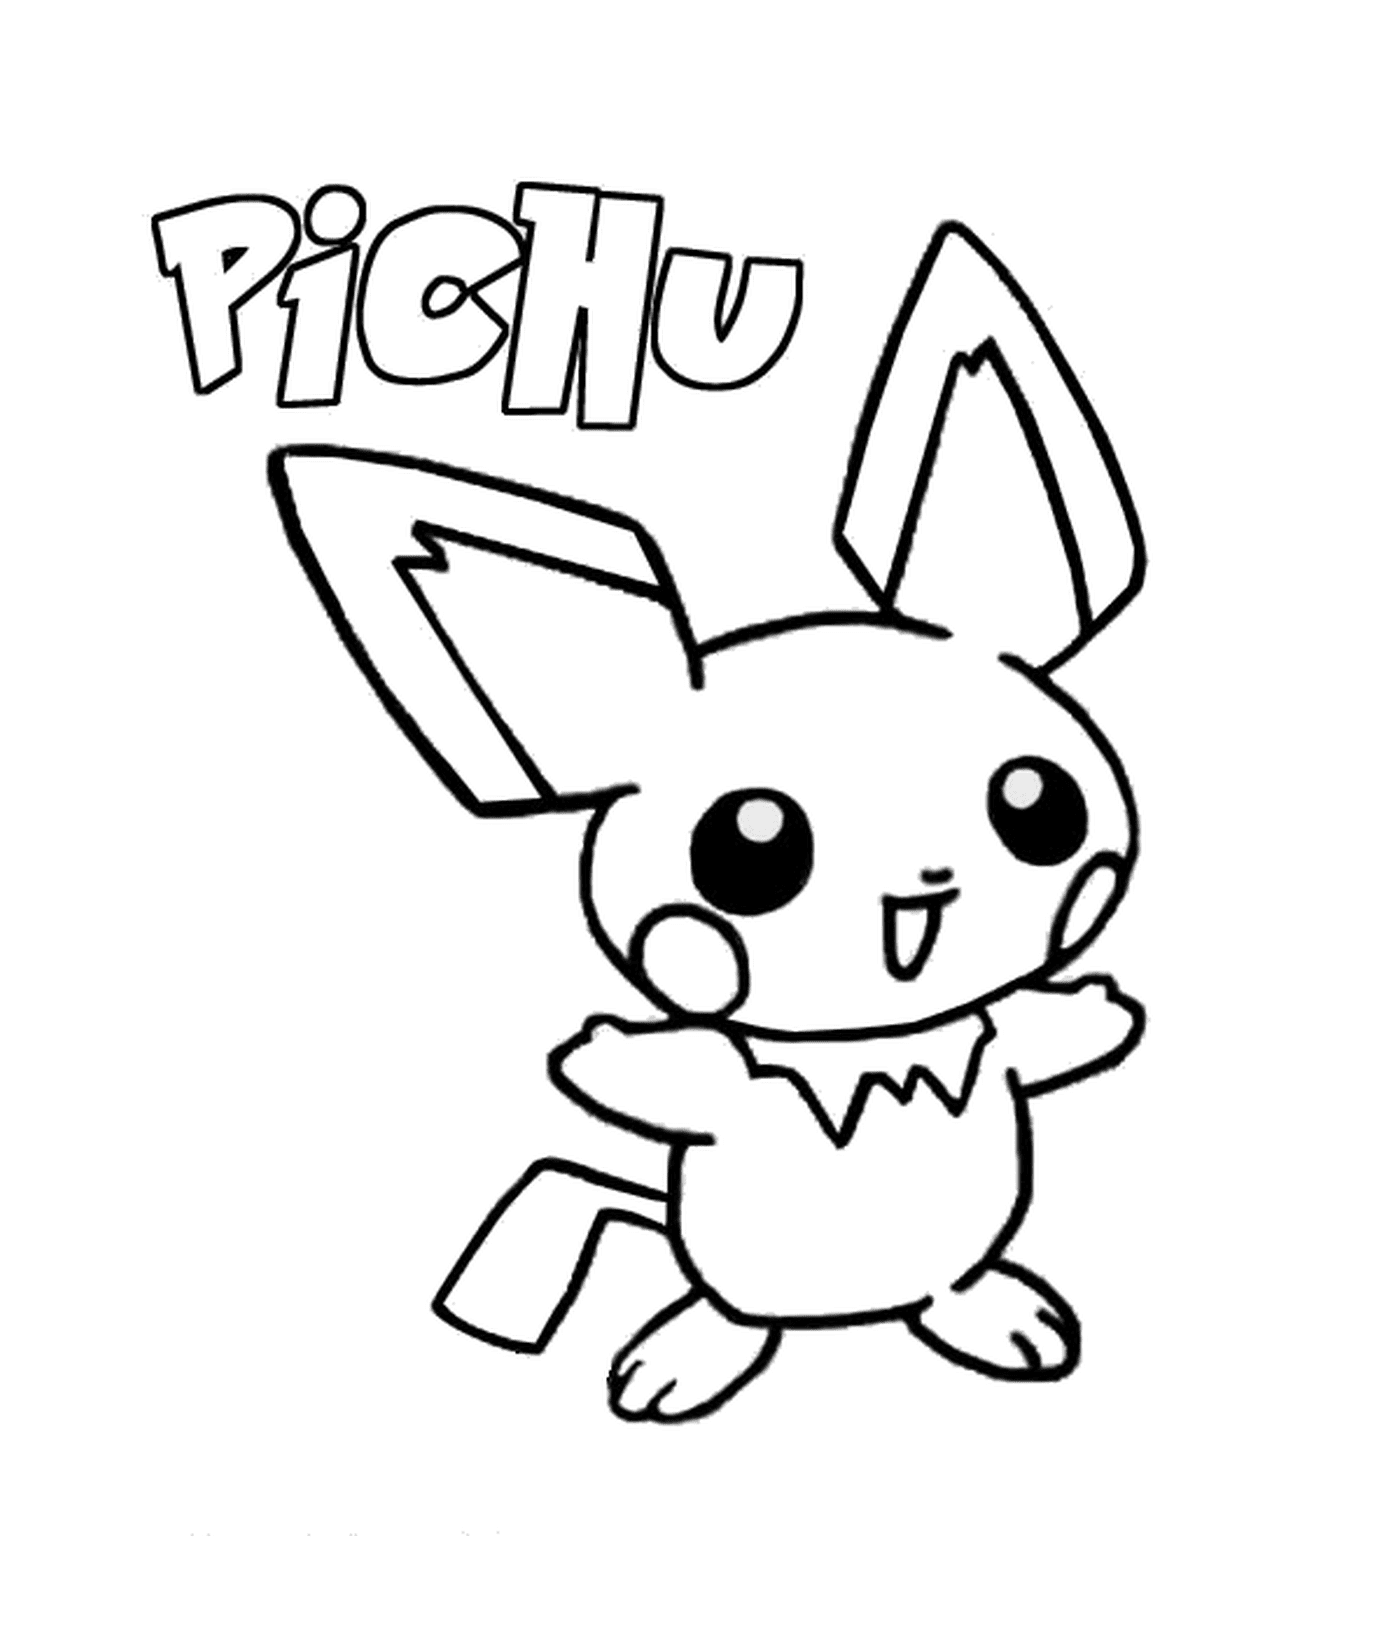   Pichu : Version bébé de Pikachu 